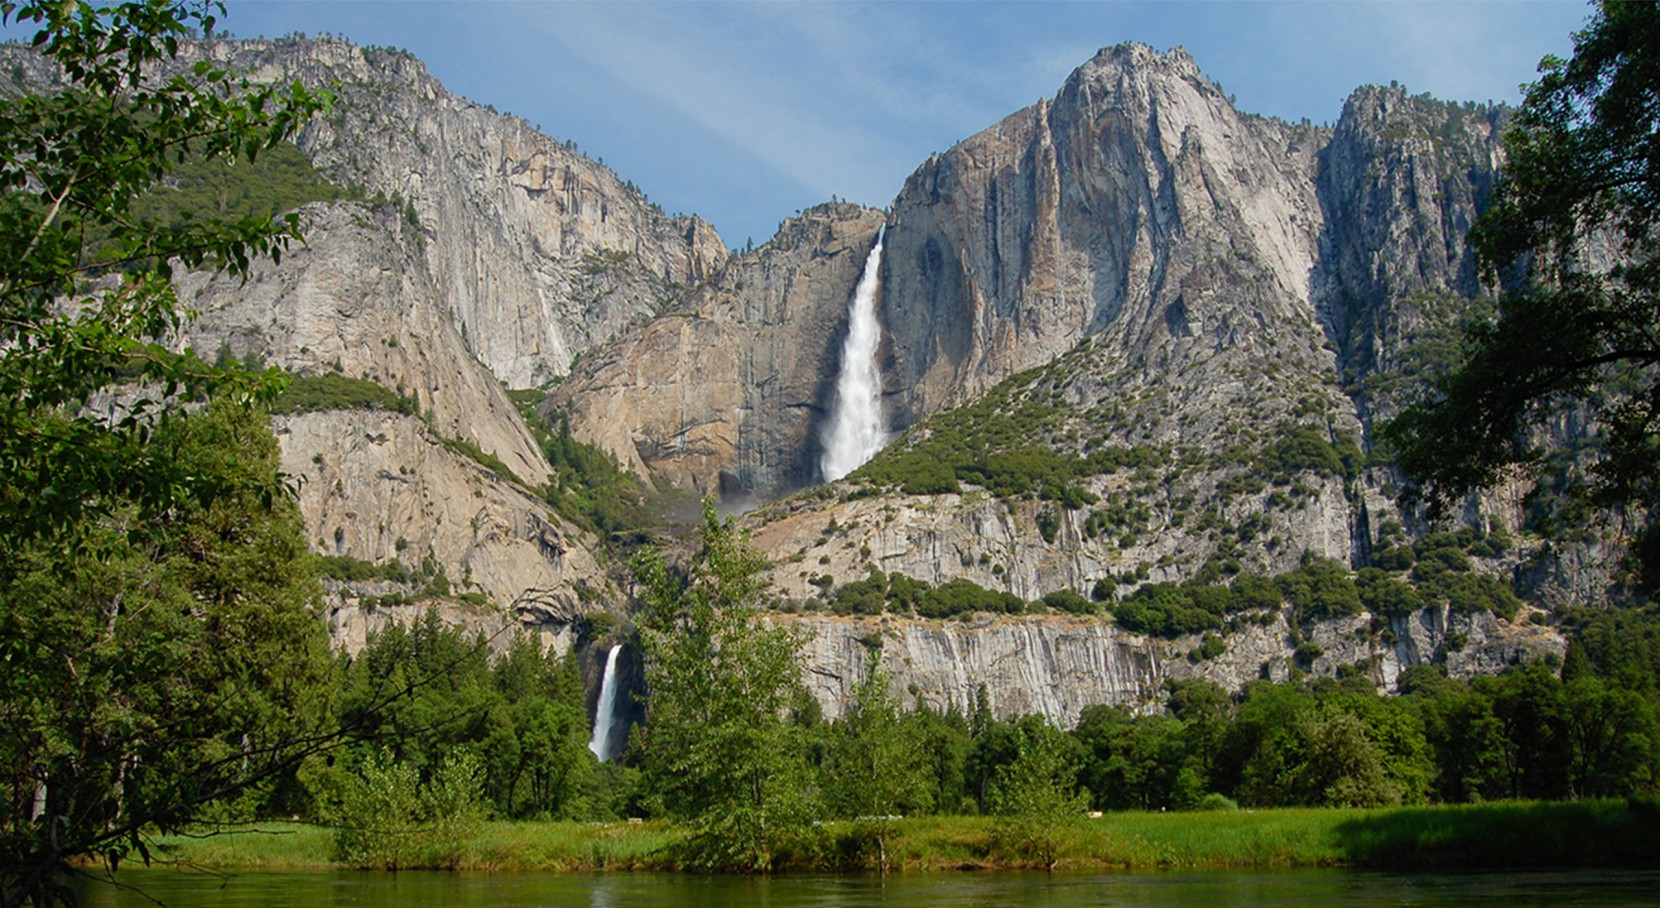 Lower Falls at Yosemite National Park